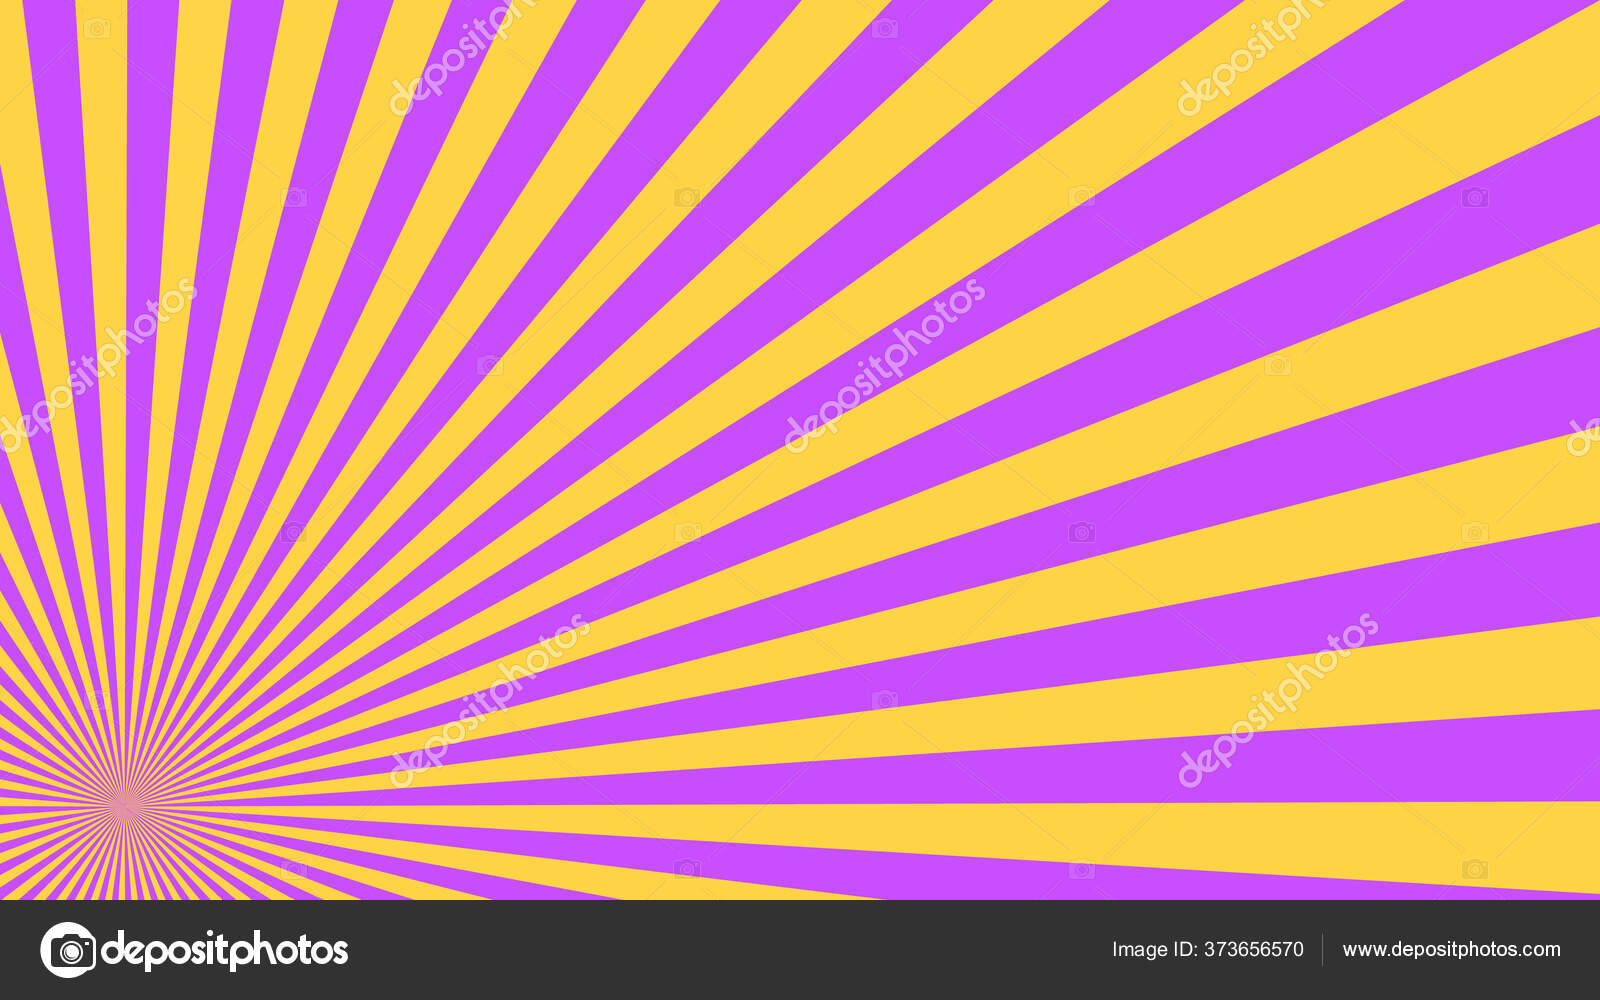 Download Violet Striped Sunburst GFX Background